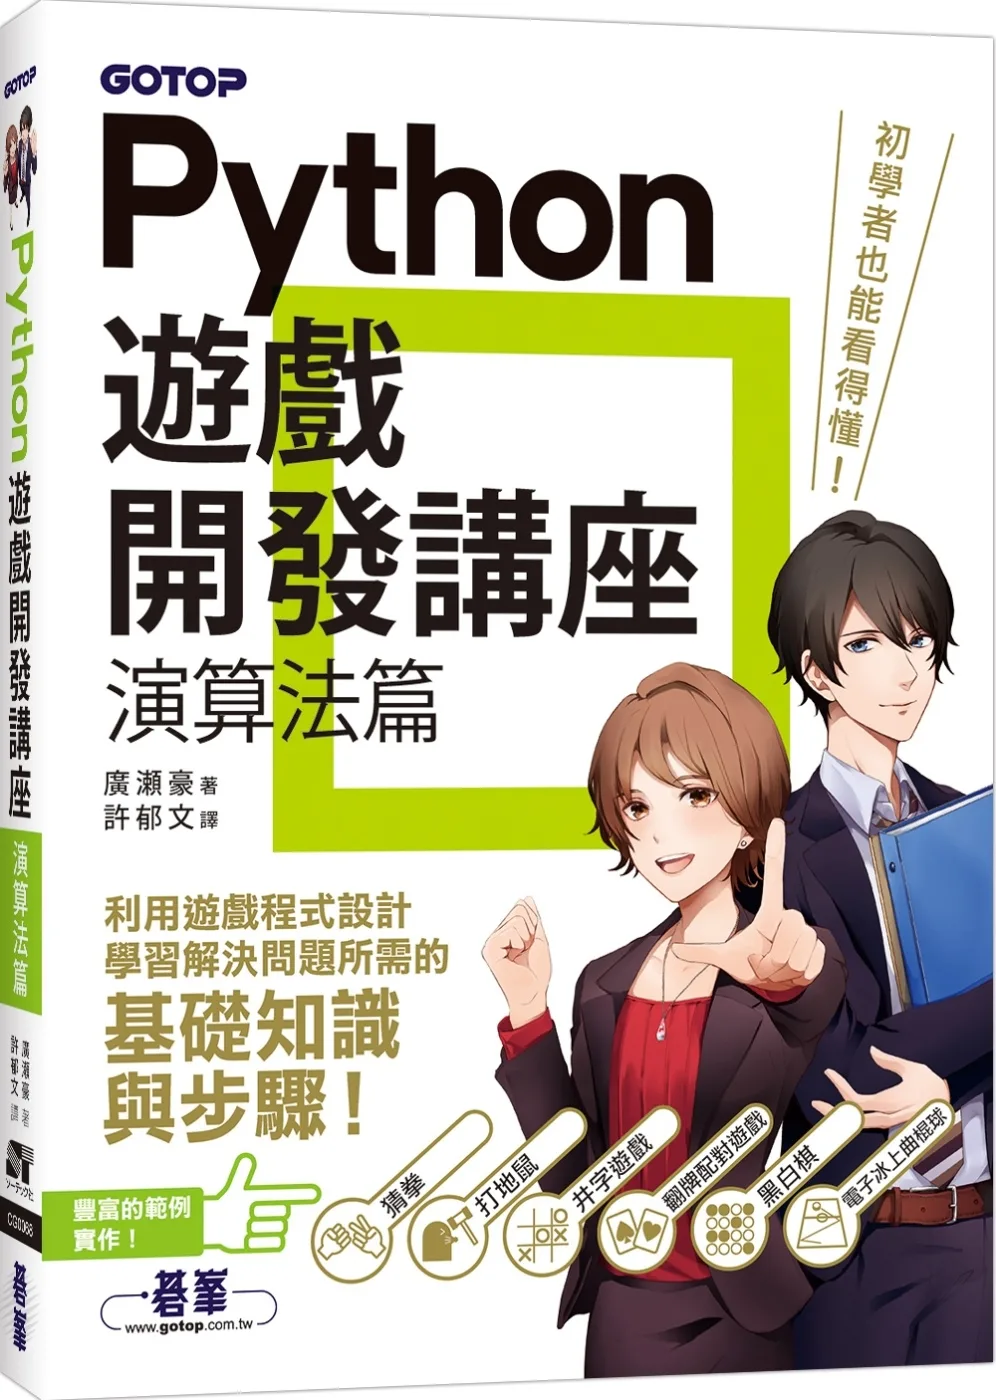 Python遊戲開發講座｜演算法篇